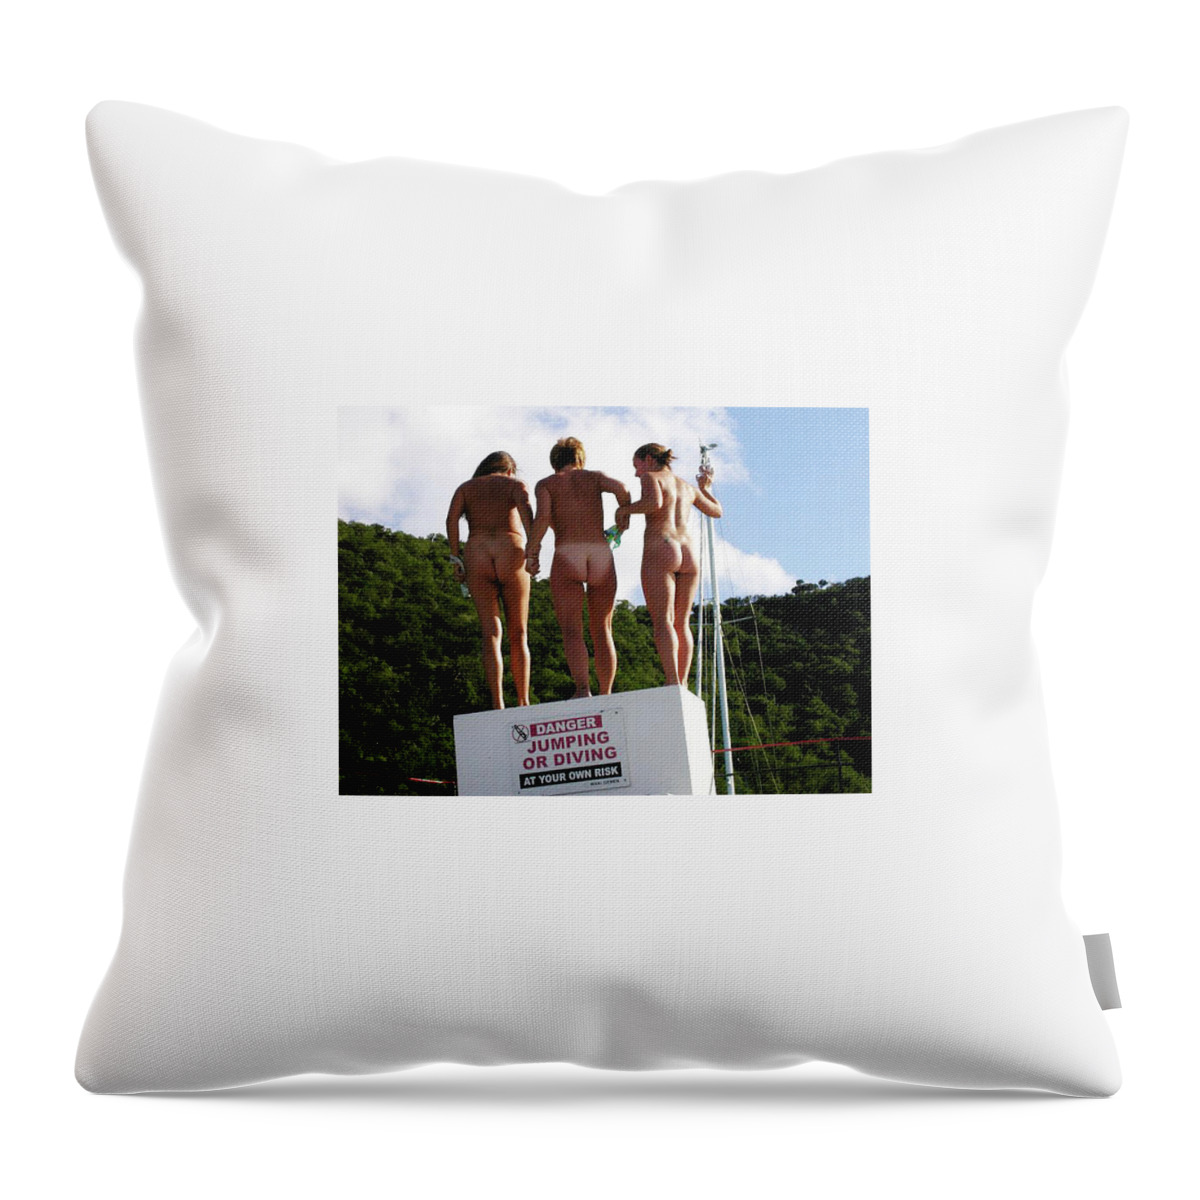 Nude Girls Throw Pillow featuring the digital art Skinny Dipping on the Jolly Roger by Vagabond Folk Art - Virginia Vivier